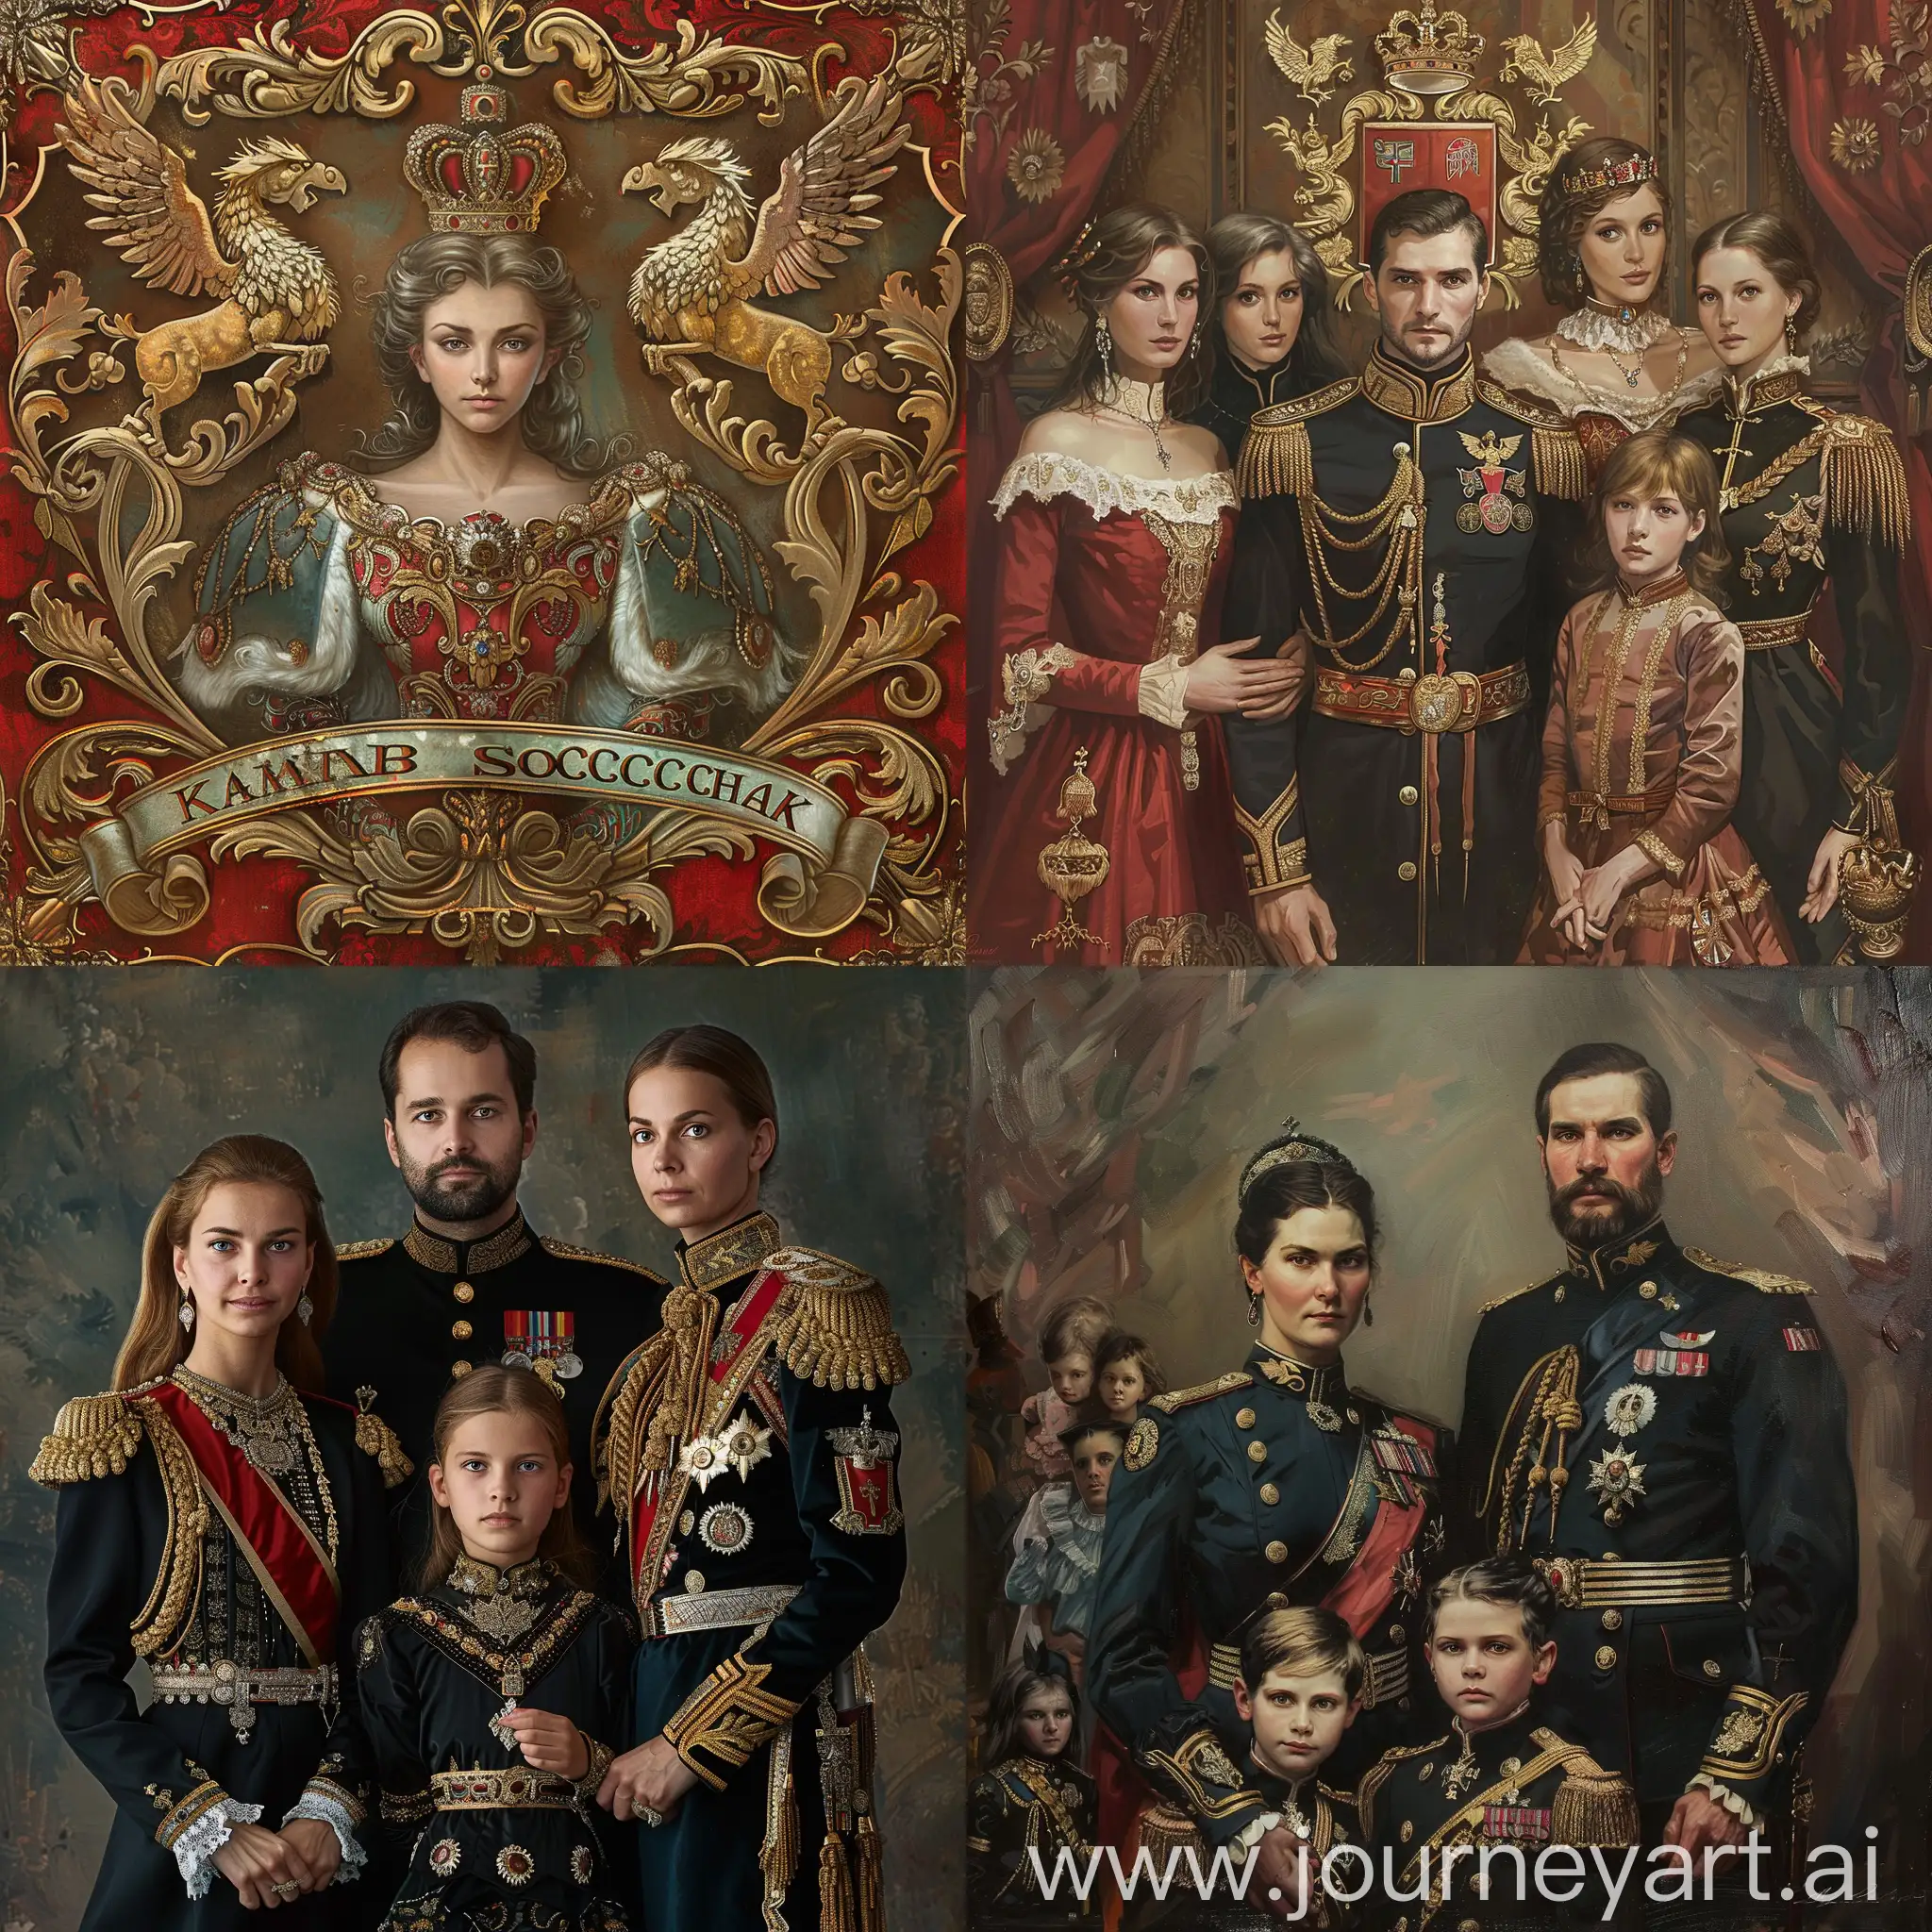 Ksenia-Sobchak-Family-Heraldry-Portrait-in-V6-Style